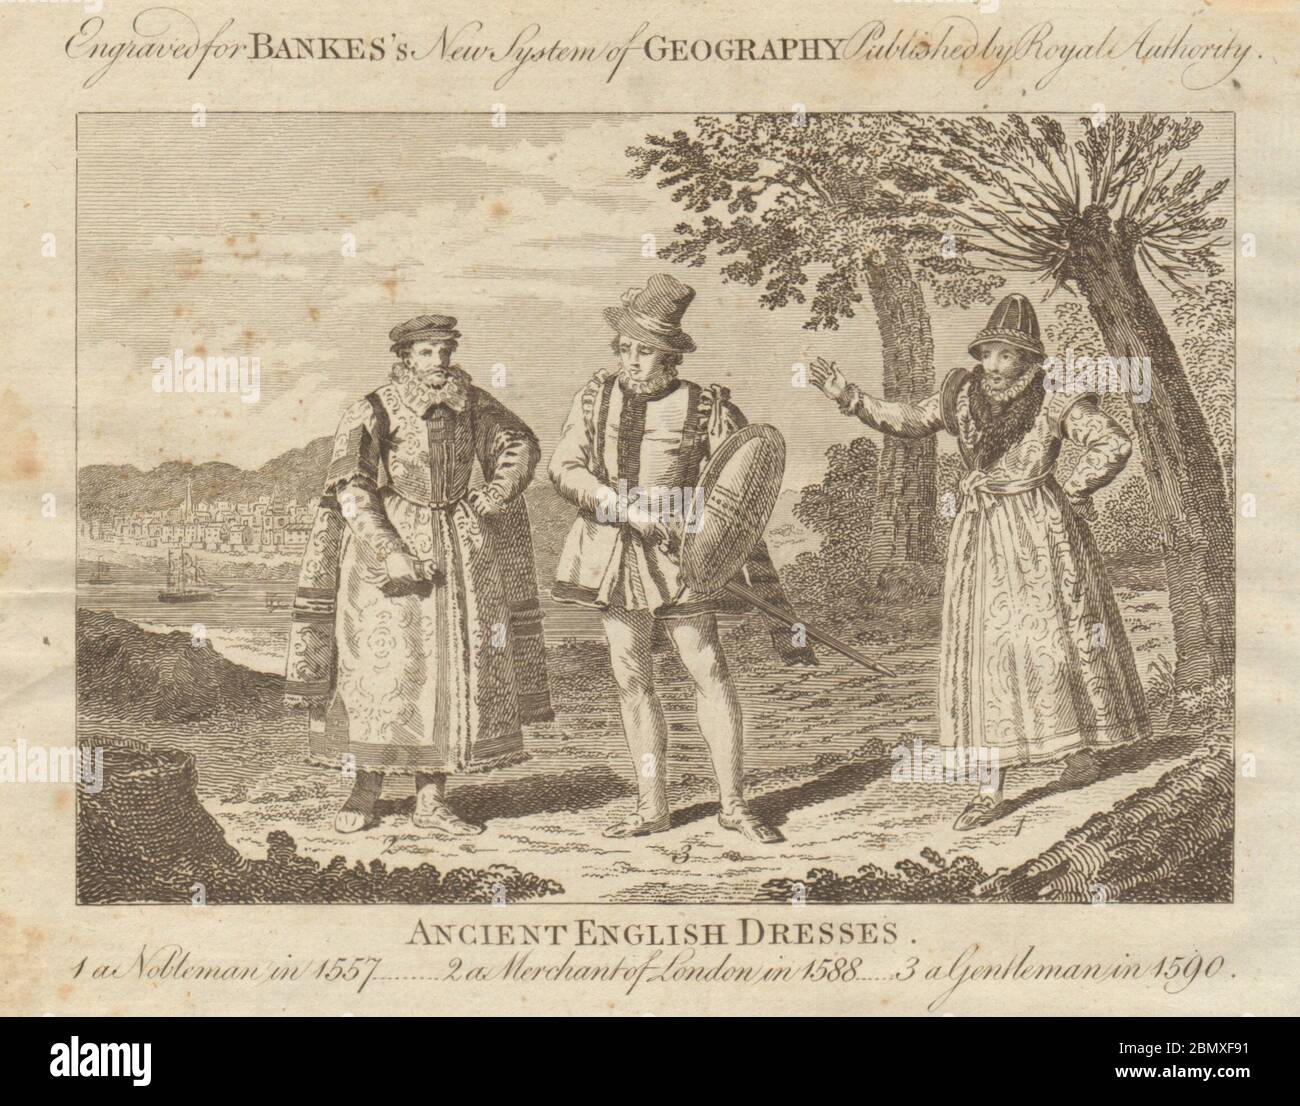 Robe anglaise. Noble 1557. Marchand de Londres 1588. Gentleman 1590. BANKES 1789 Banque D'Images